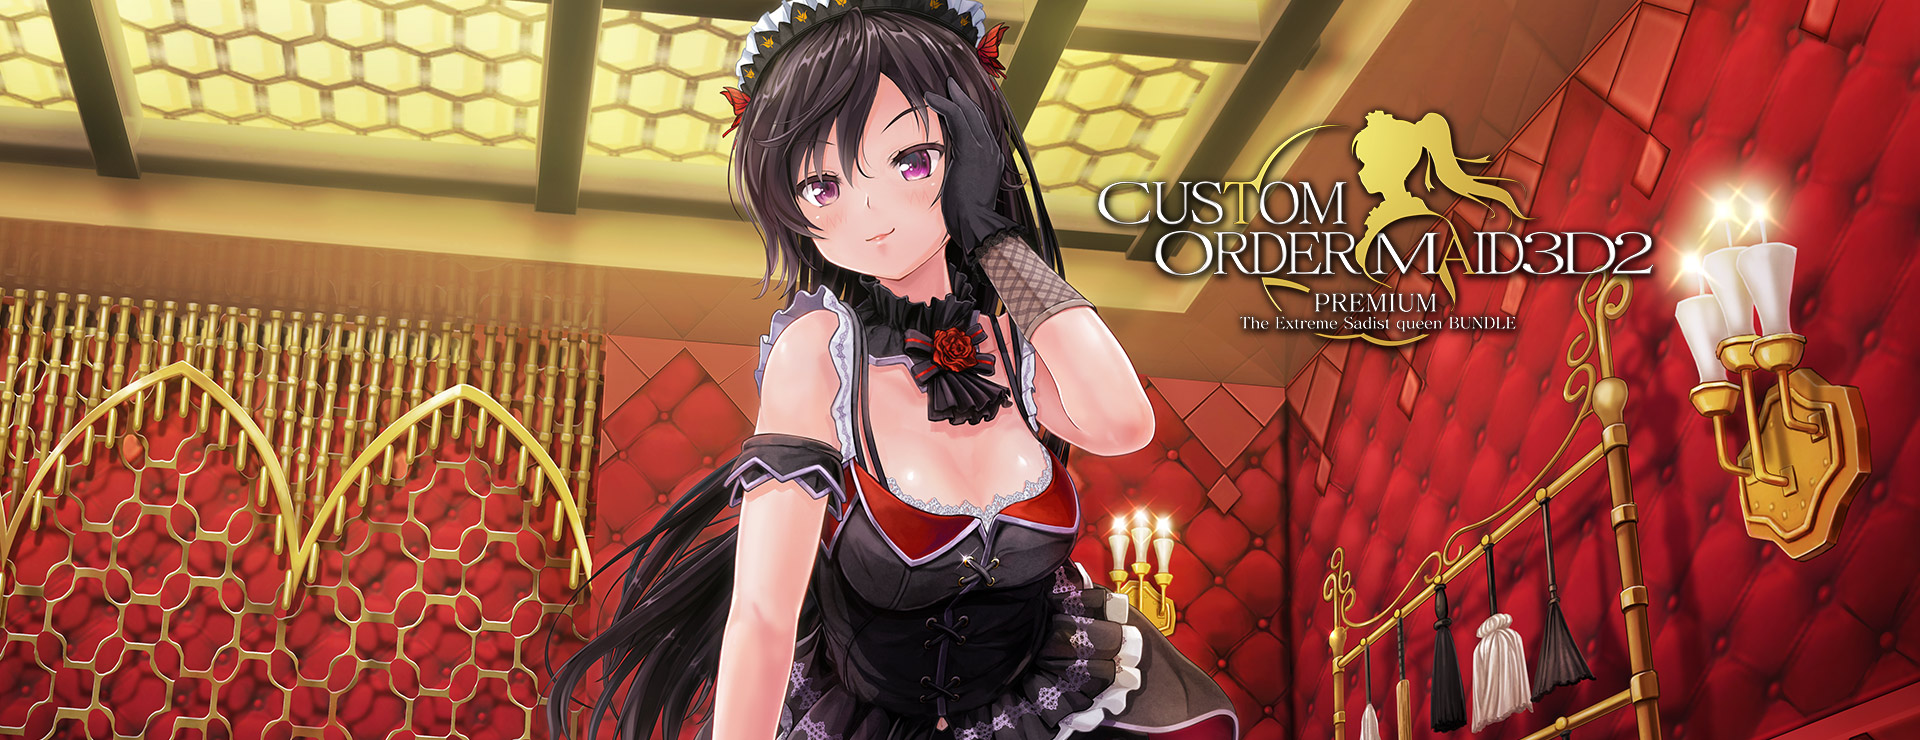 Custom Order Maid 3D2: Extreme Sadist Queen Bundle - Simulation Spiel